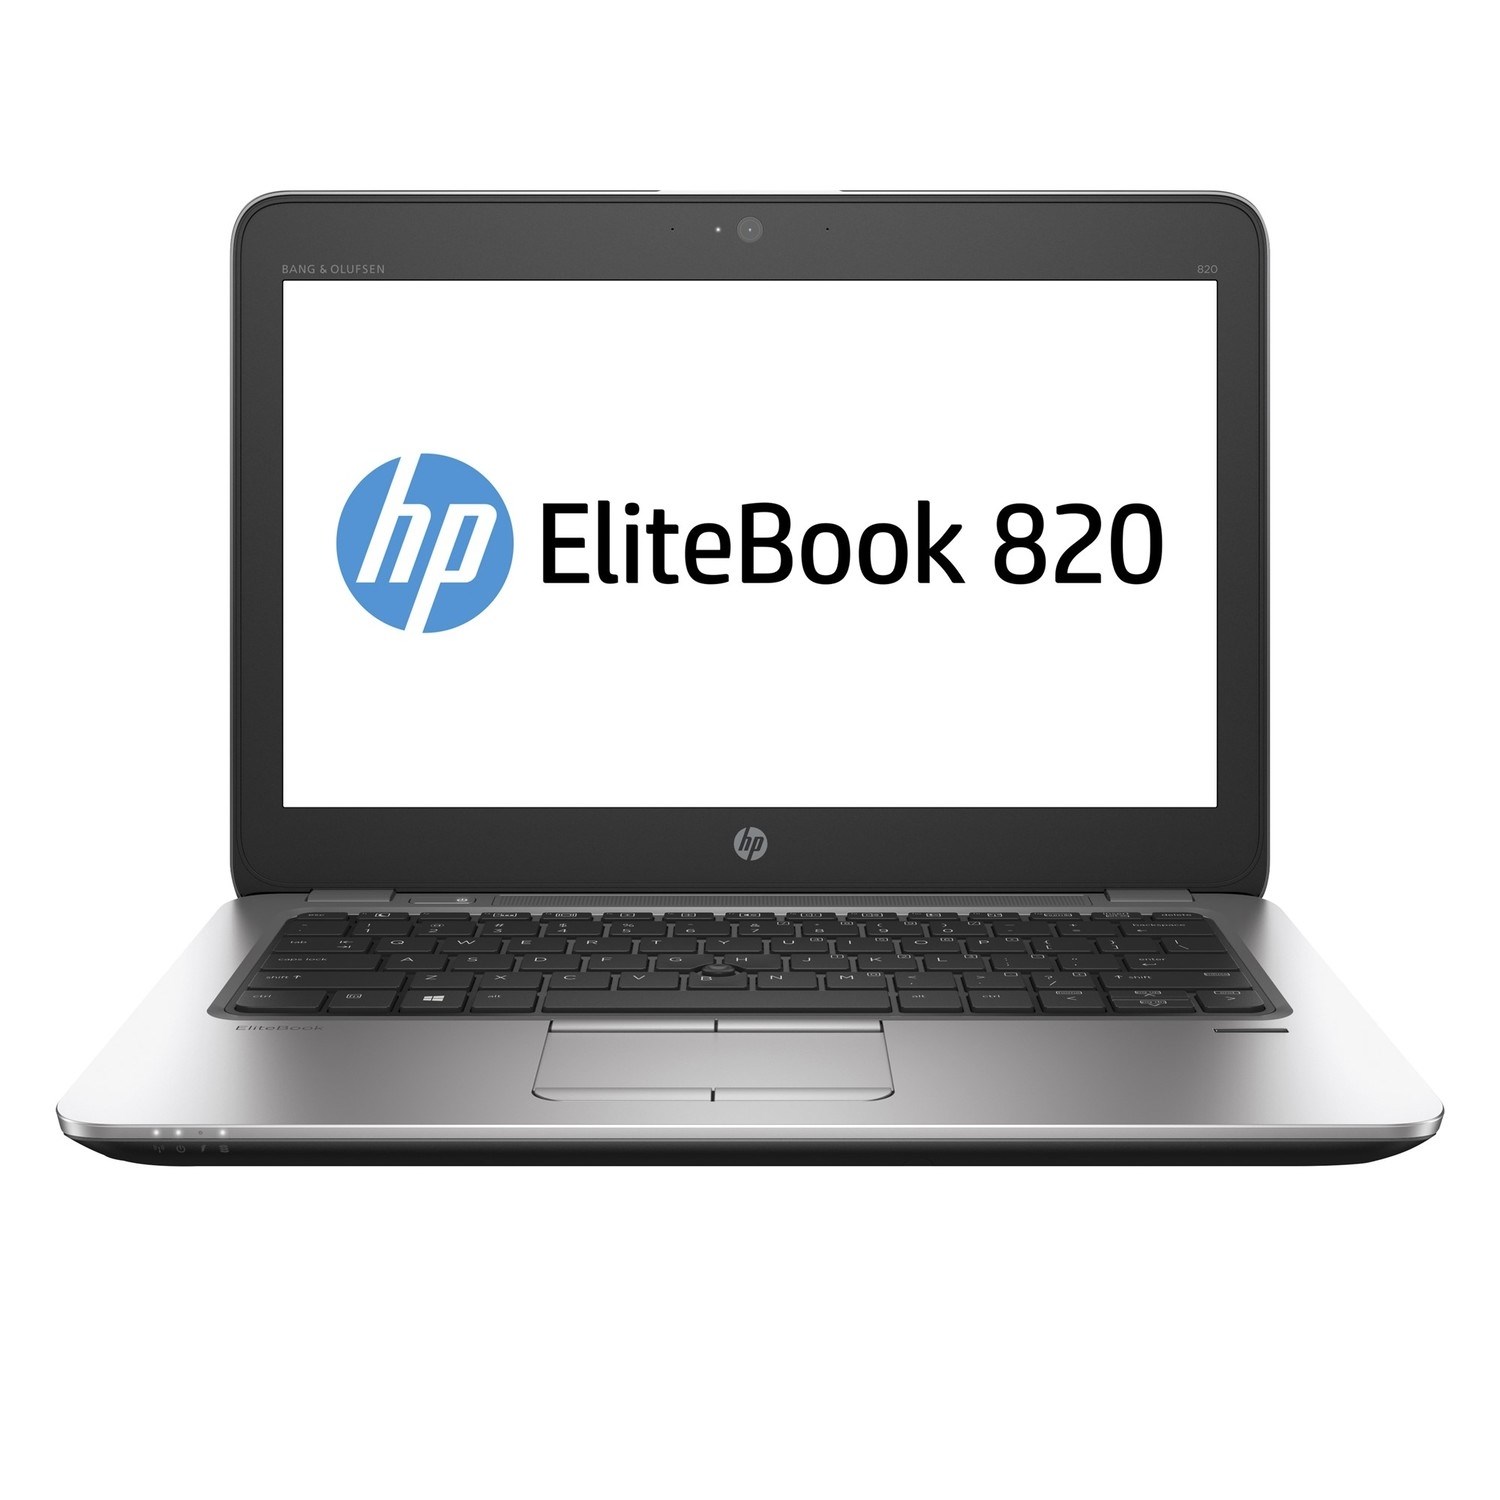 HP EliteBook 820 G4 12 Intel Core i7-7500U